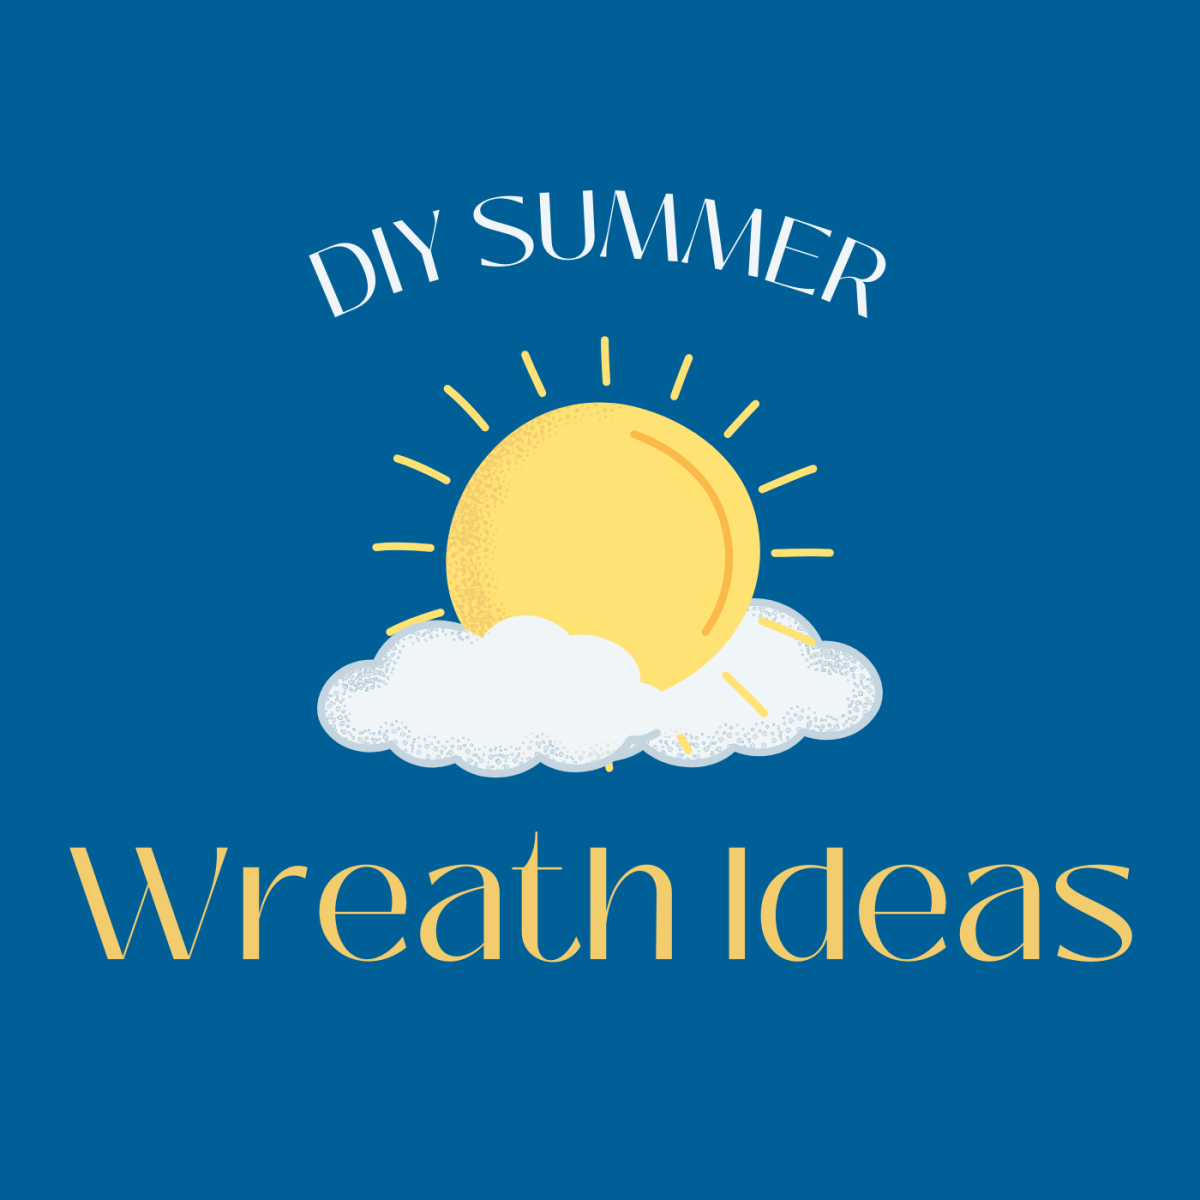 Easy Dollar Store DIY Summer Wreaths That Will Make You Feel Sunny